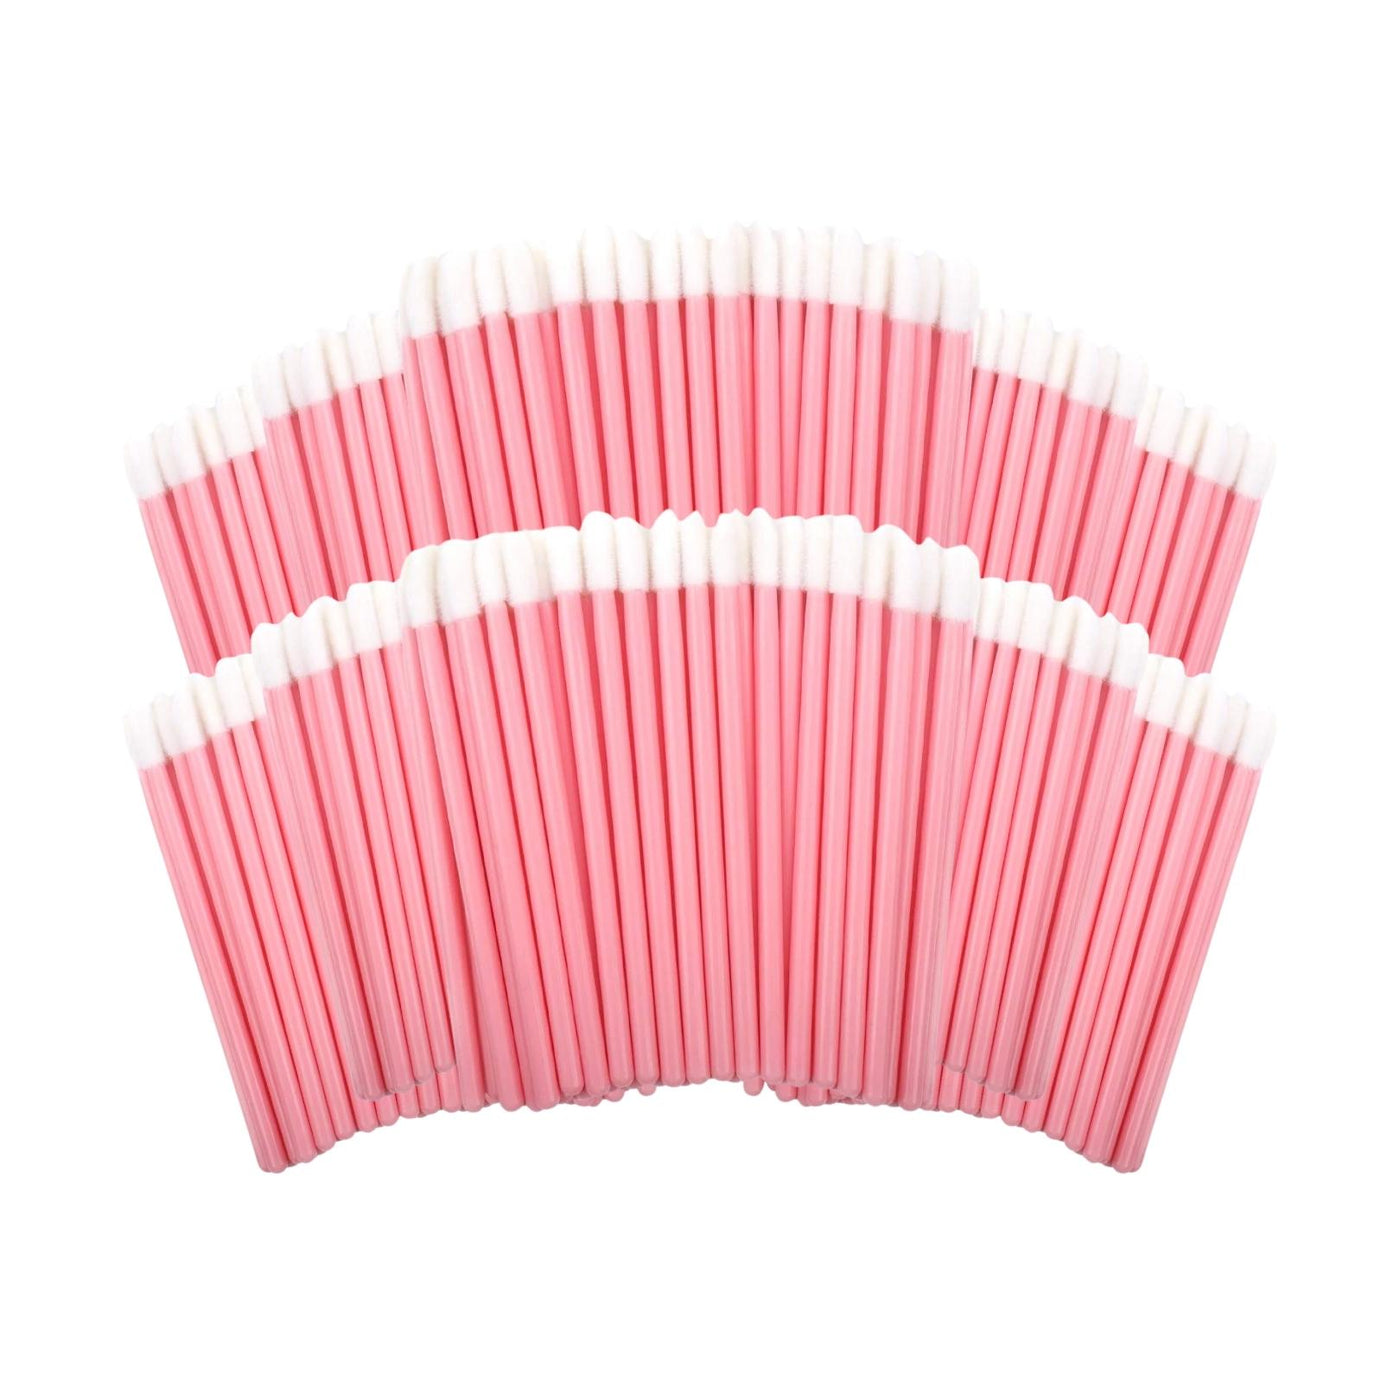 Flocked Applicator Brushes for Eyelash Extension Pink - 10 Pack